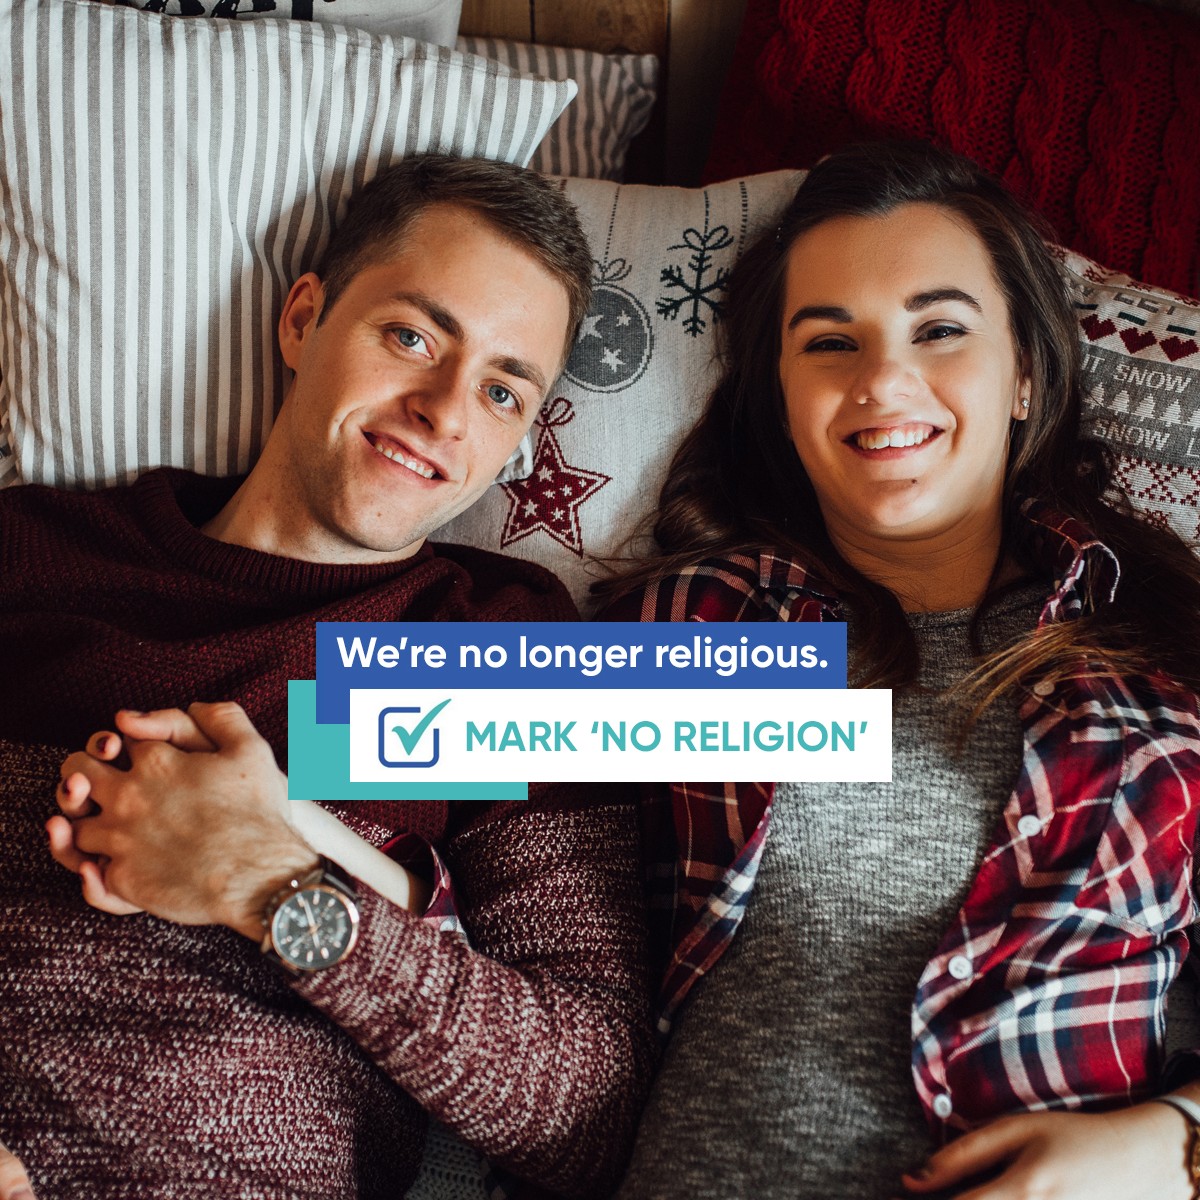 Census21 - Not Religious? Mark 'No Religion'.